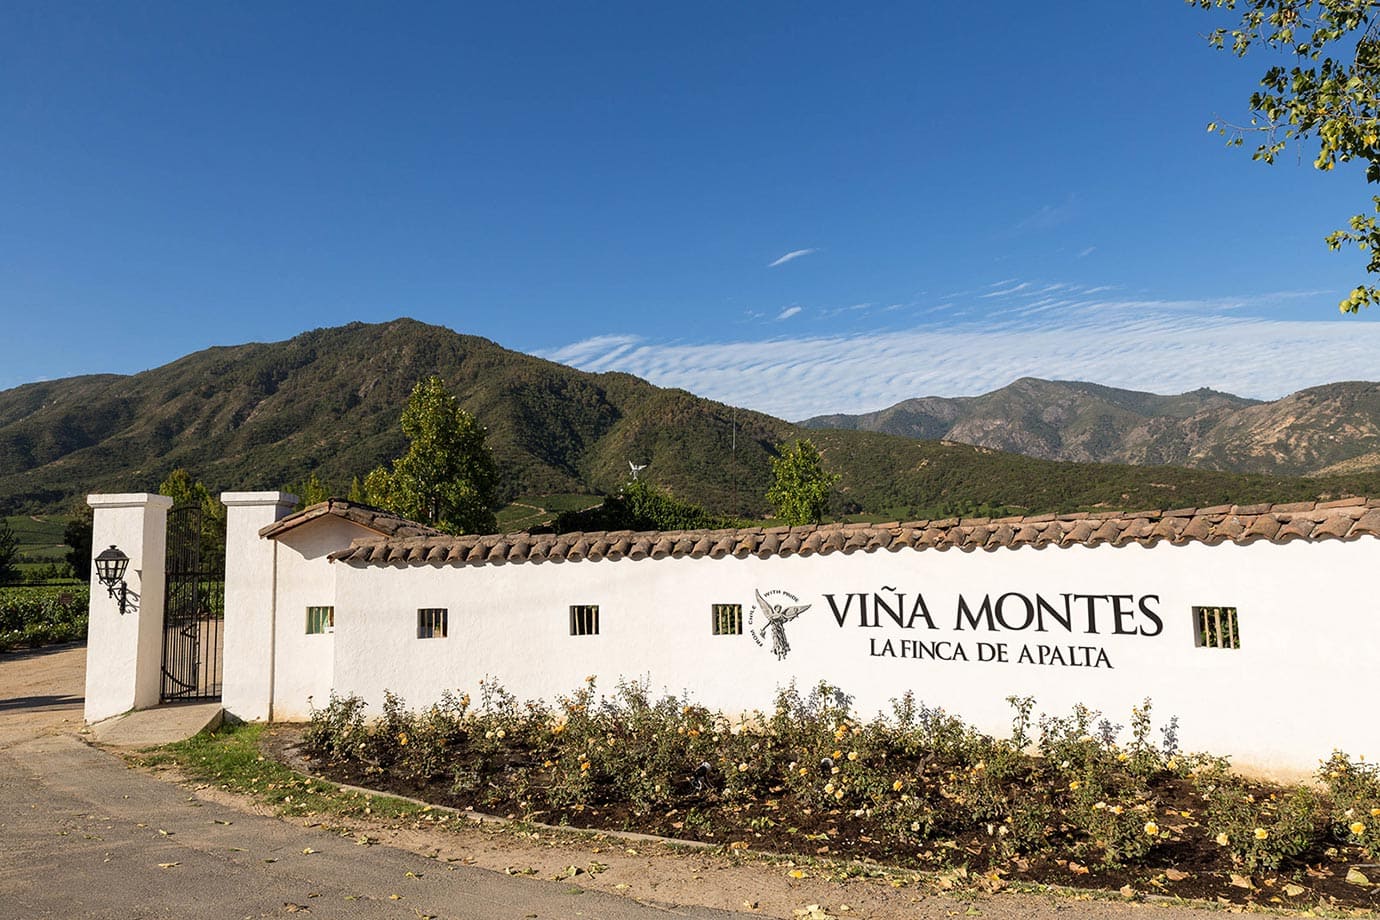 Montes vineyard, Chile